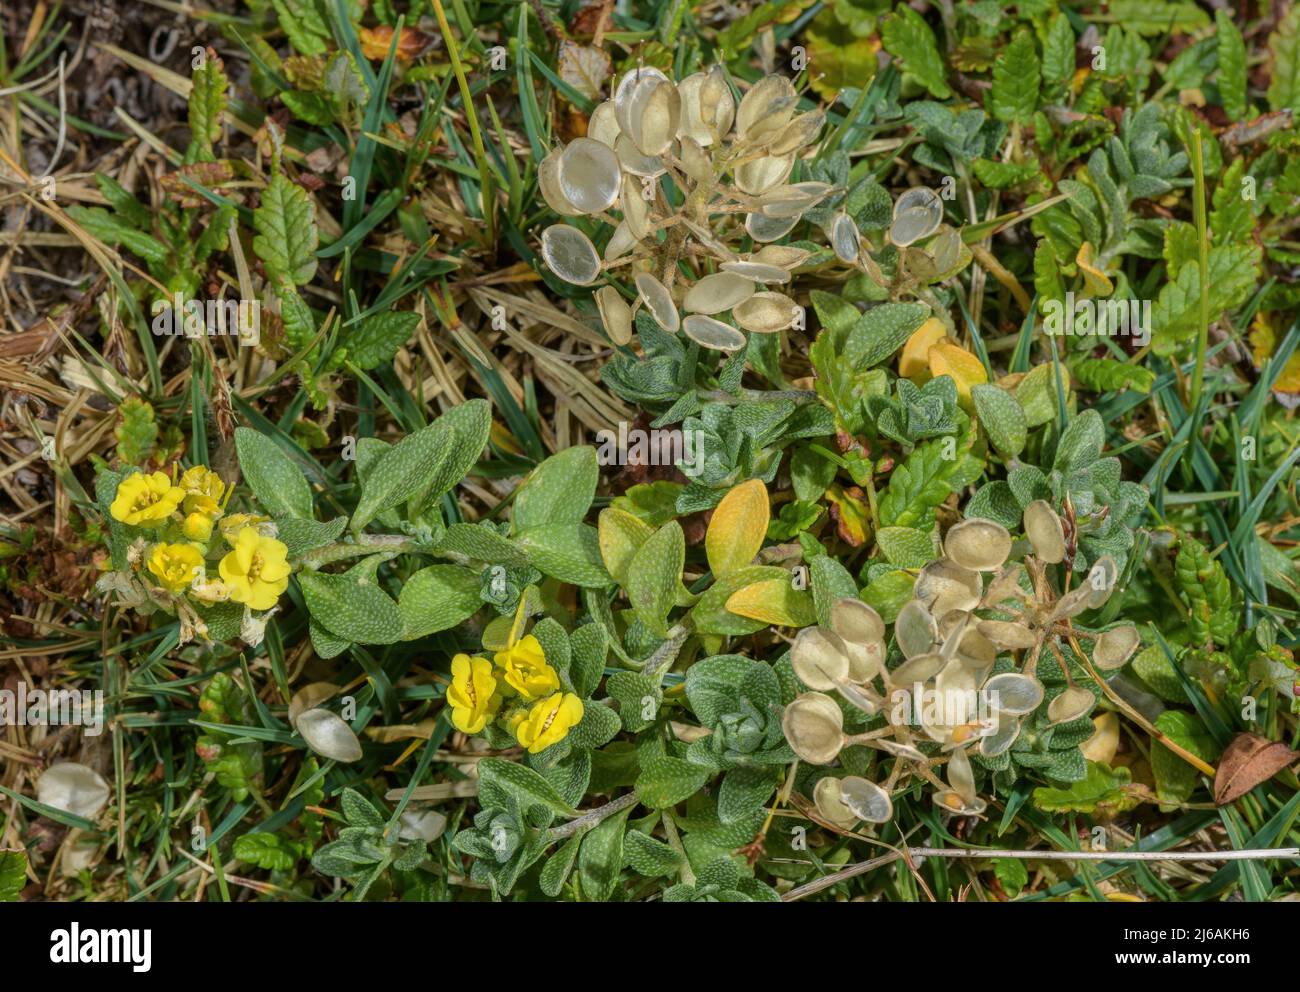 Wulfen's Alyssum, Alyssum wulfenianum in flower and fruit, in limestone turf; Karawanken mountains. Stock Photo